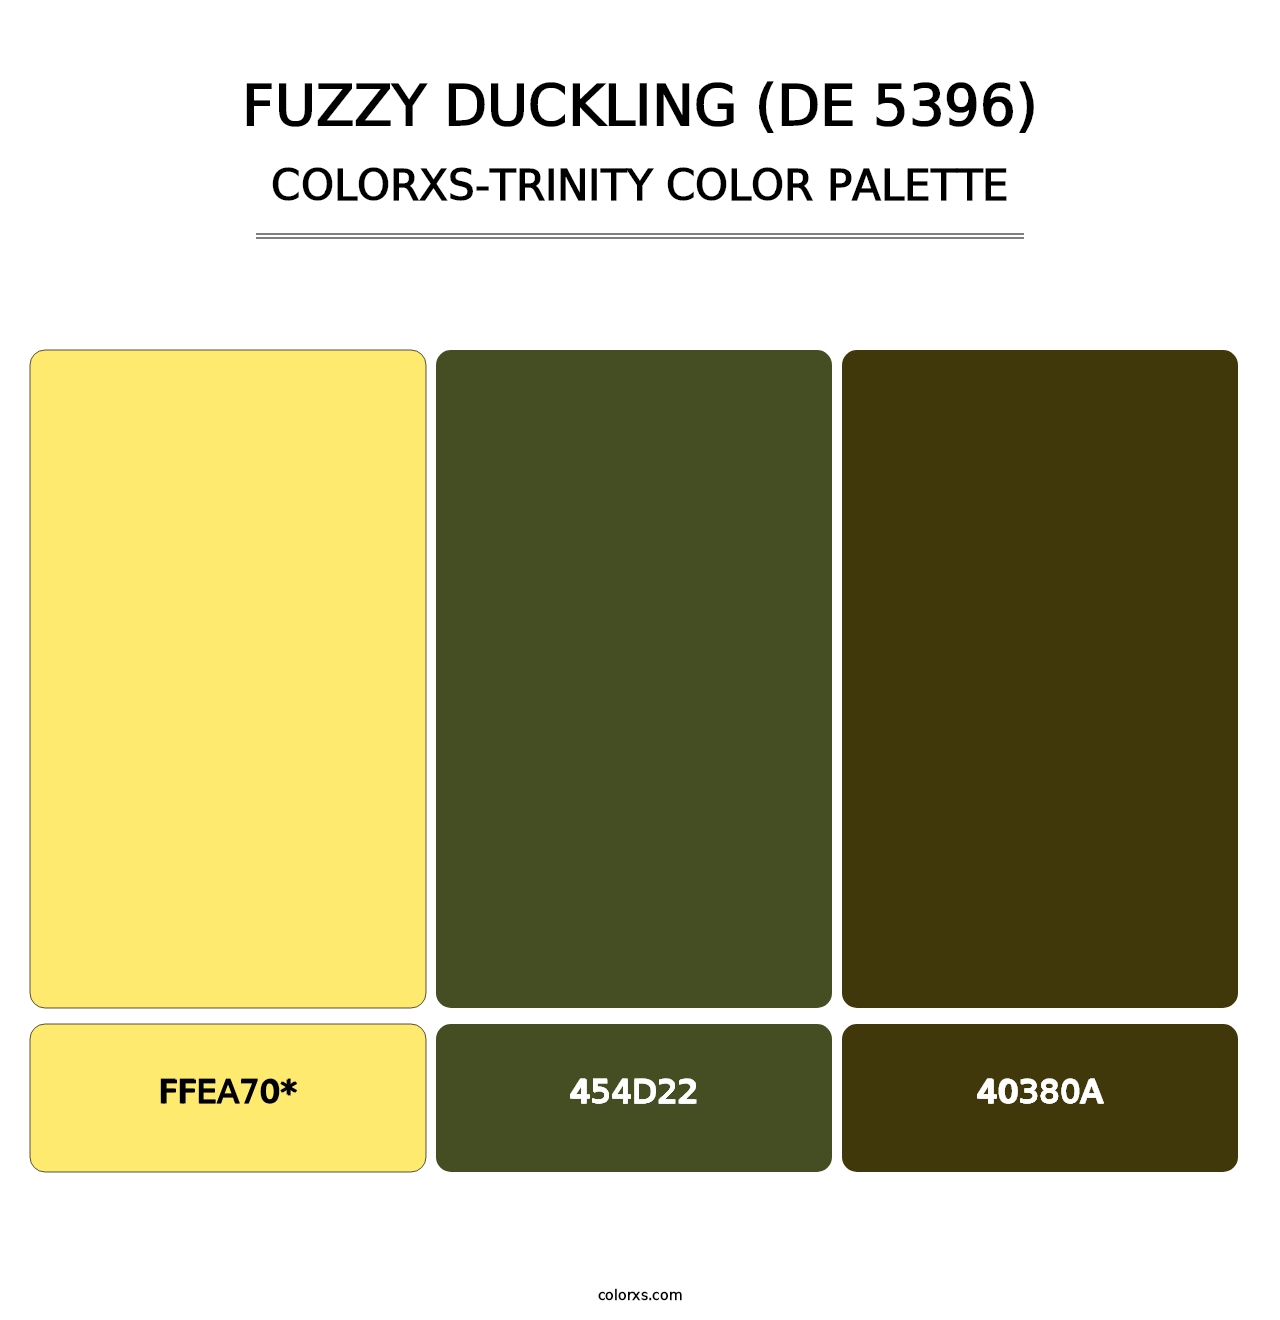 Fuzzy Duckling (DE 5396) - Colorxs Trinity Palette